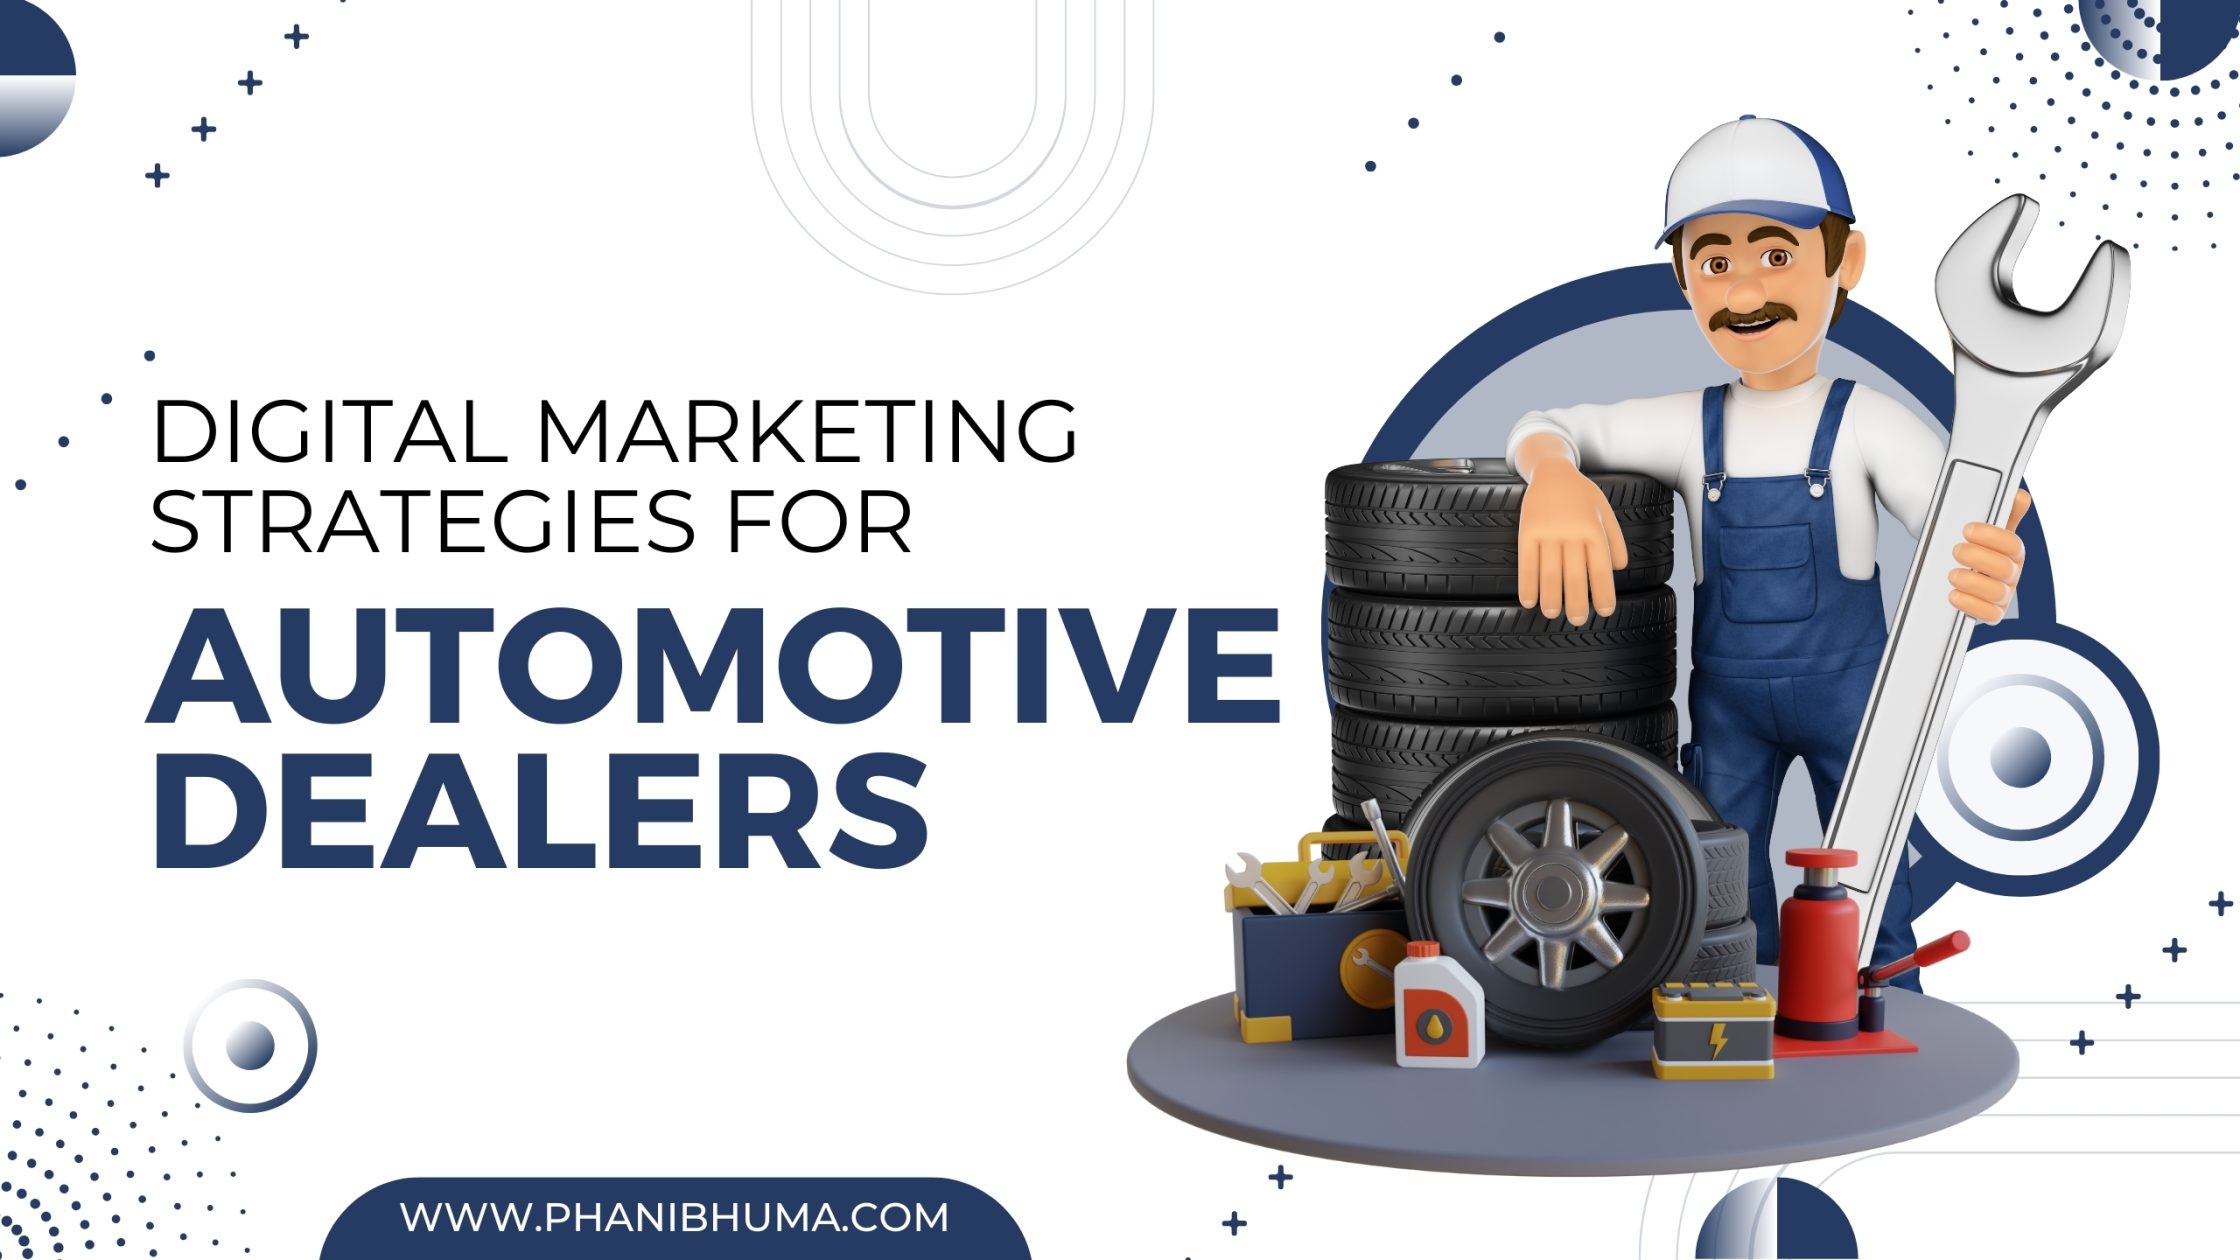 Top Digital Marketing Strategies for Automotive Dealerships